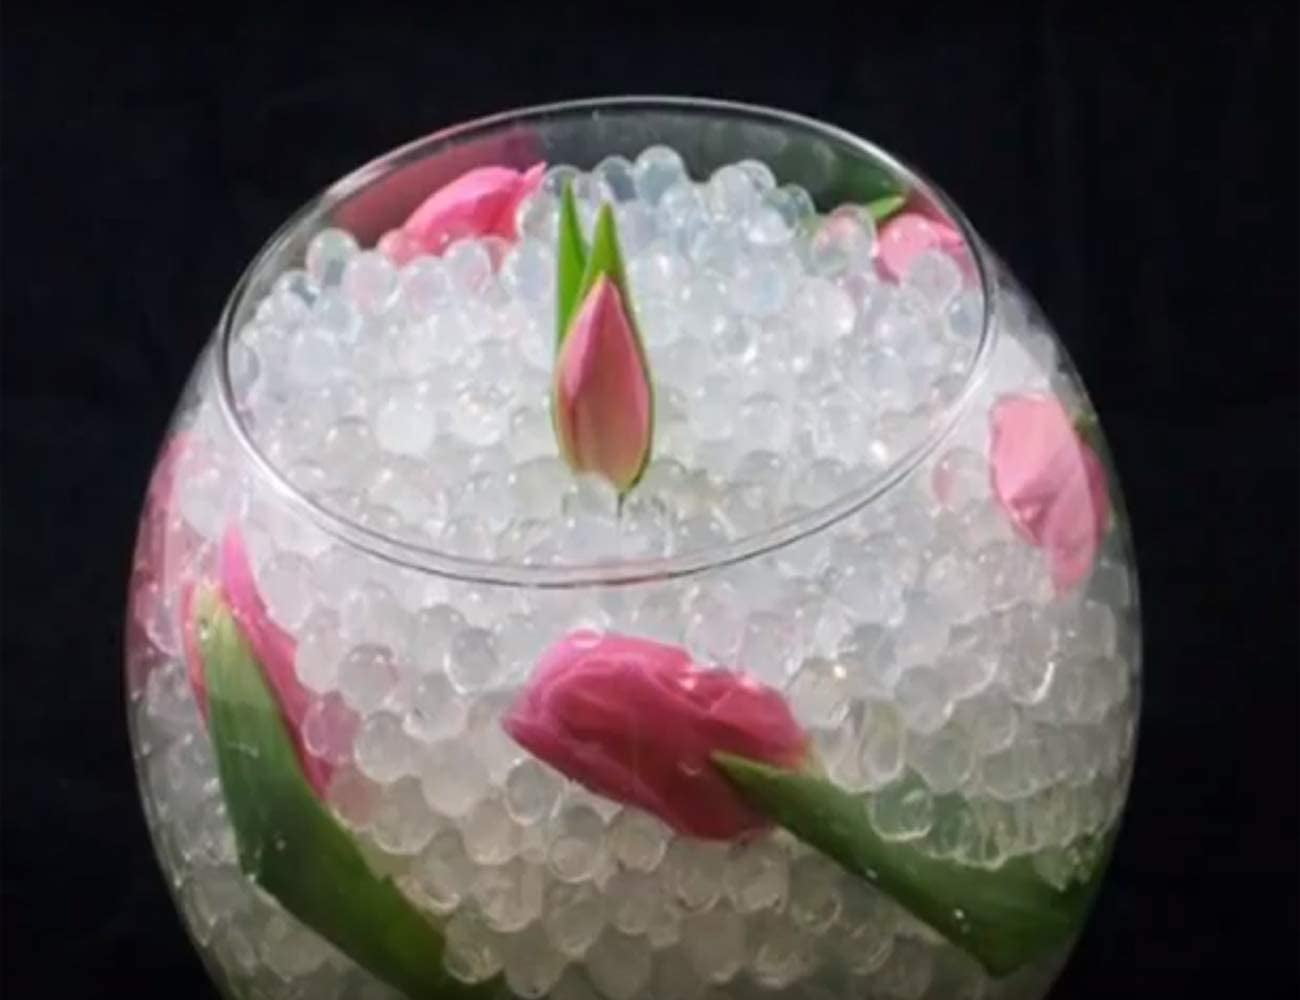 Sooperbeads 20 000 Vase Filler Beads Gems Water Growing Crystal Clear Transluce for sale online 